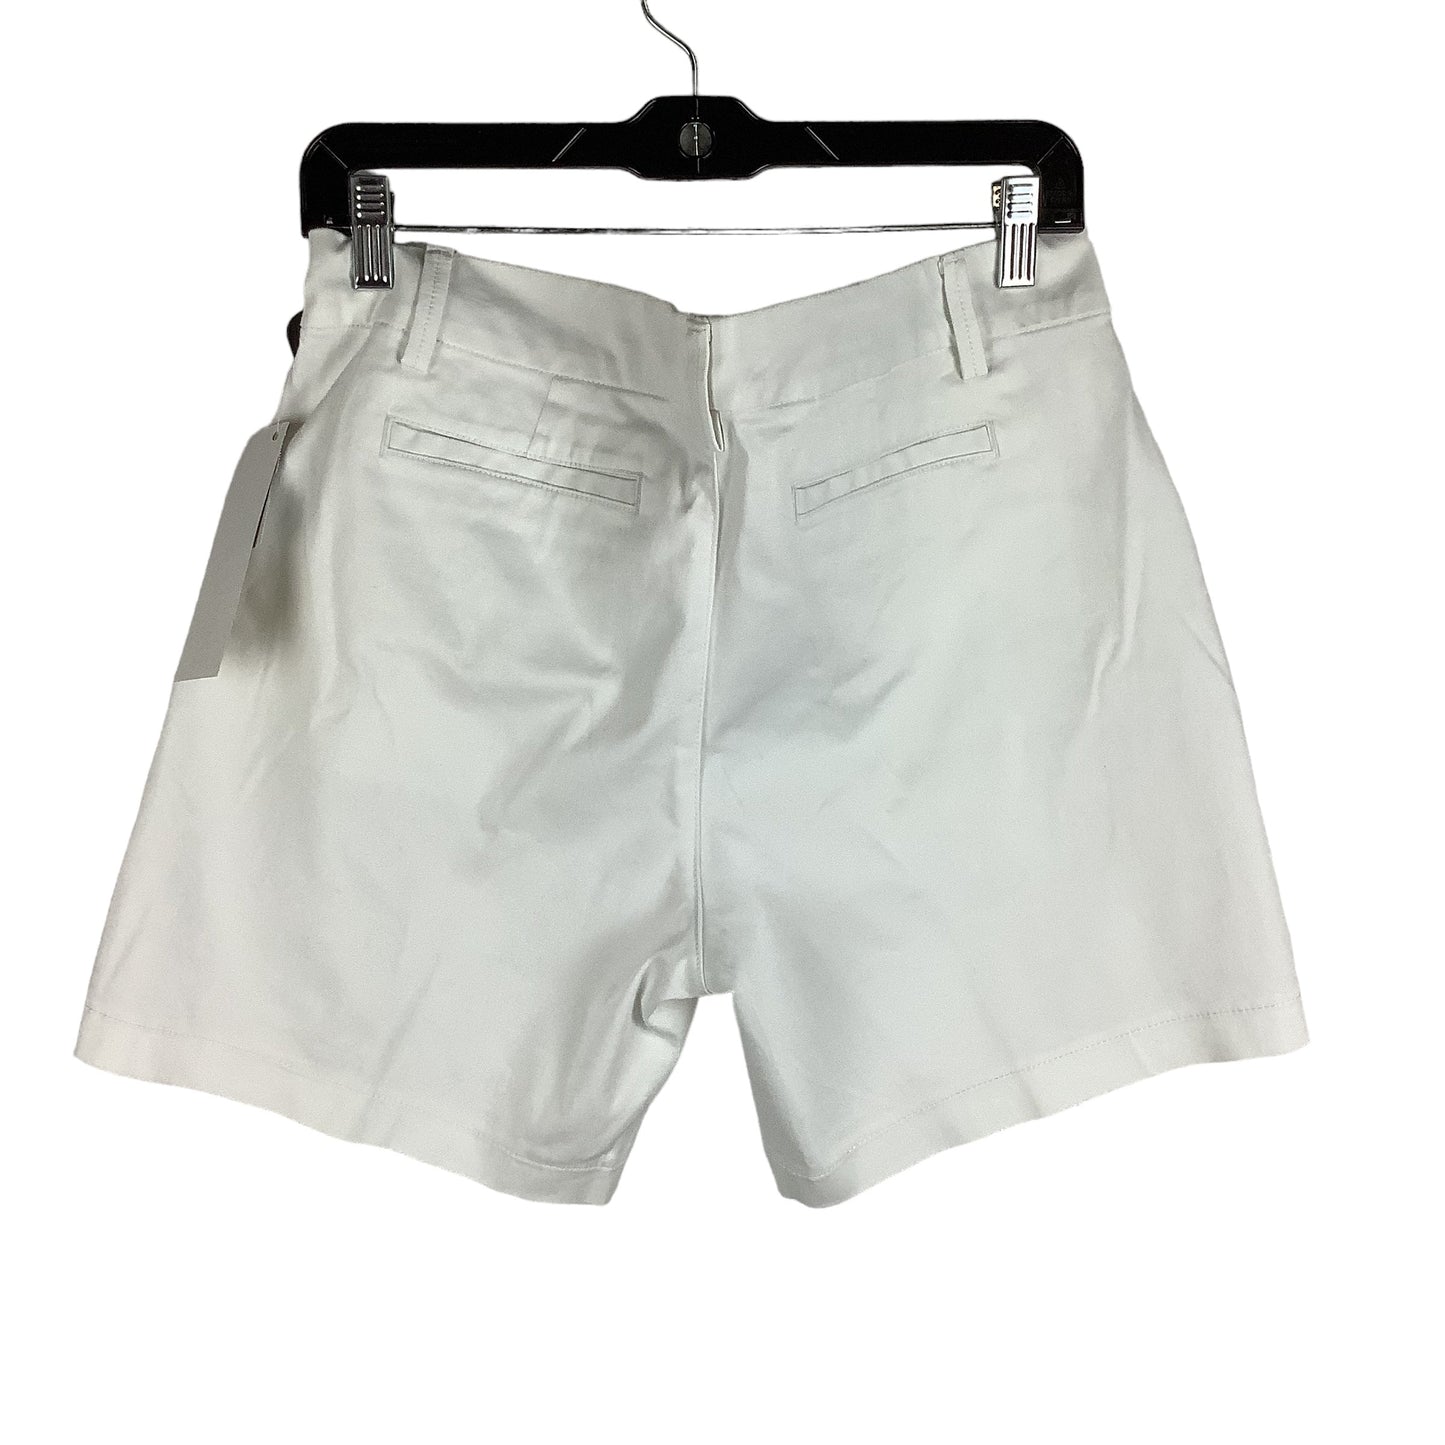 White Shorts Designer Lilly Pulitzer, Size 10